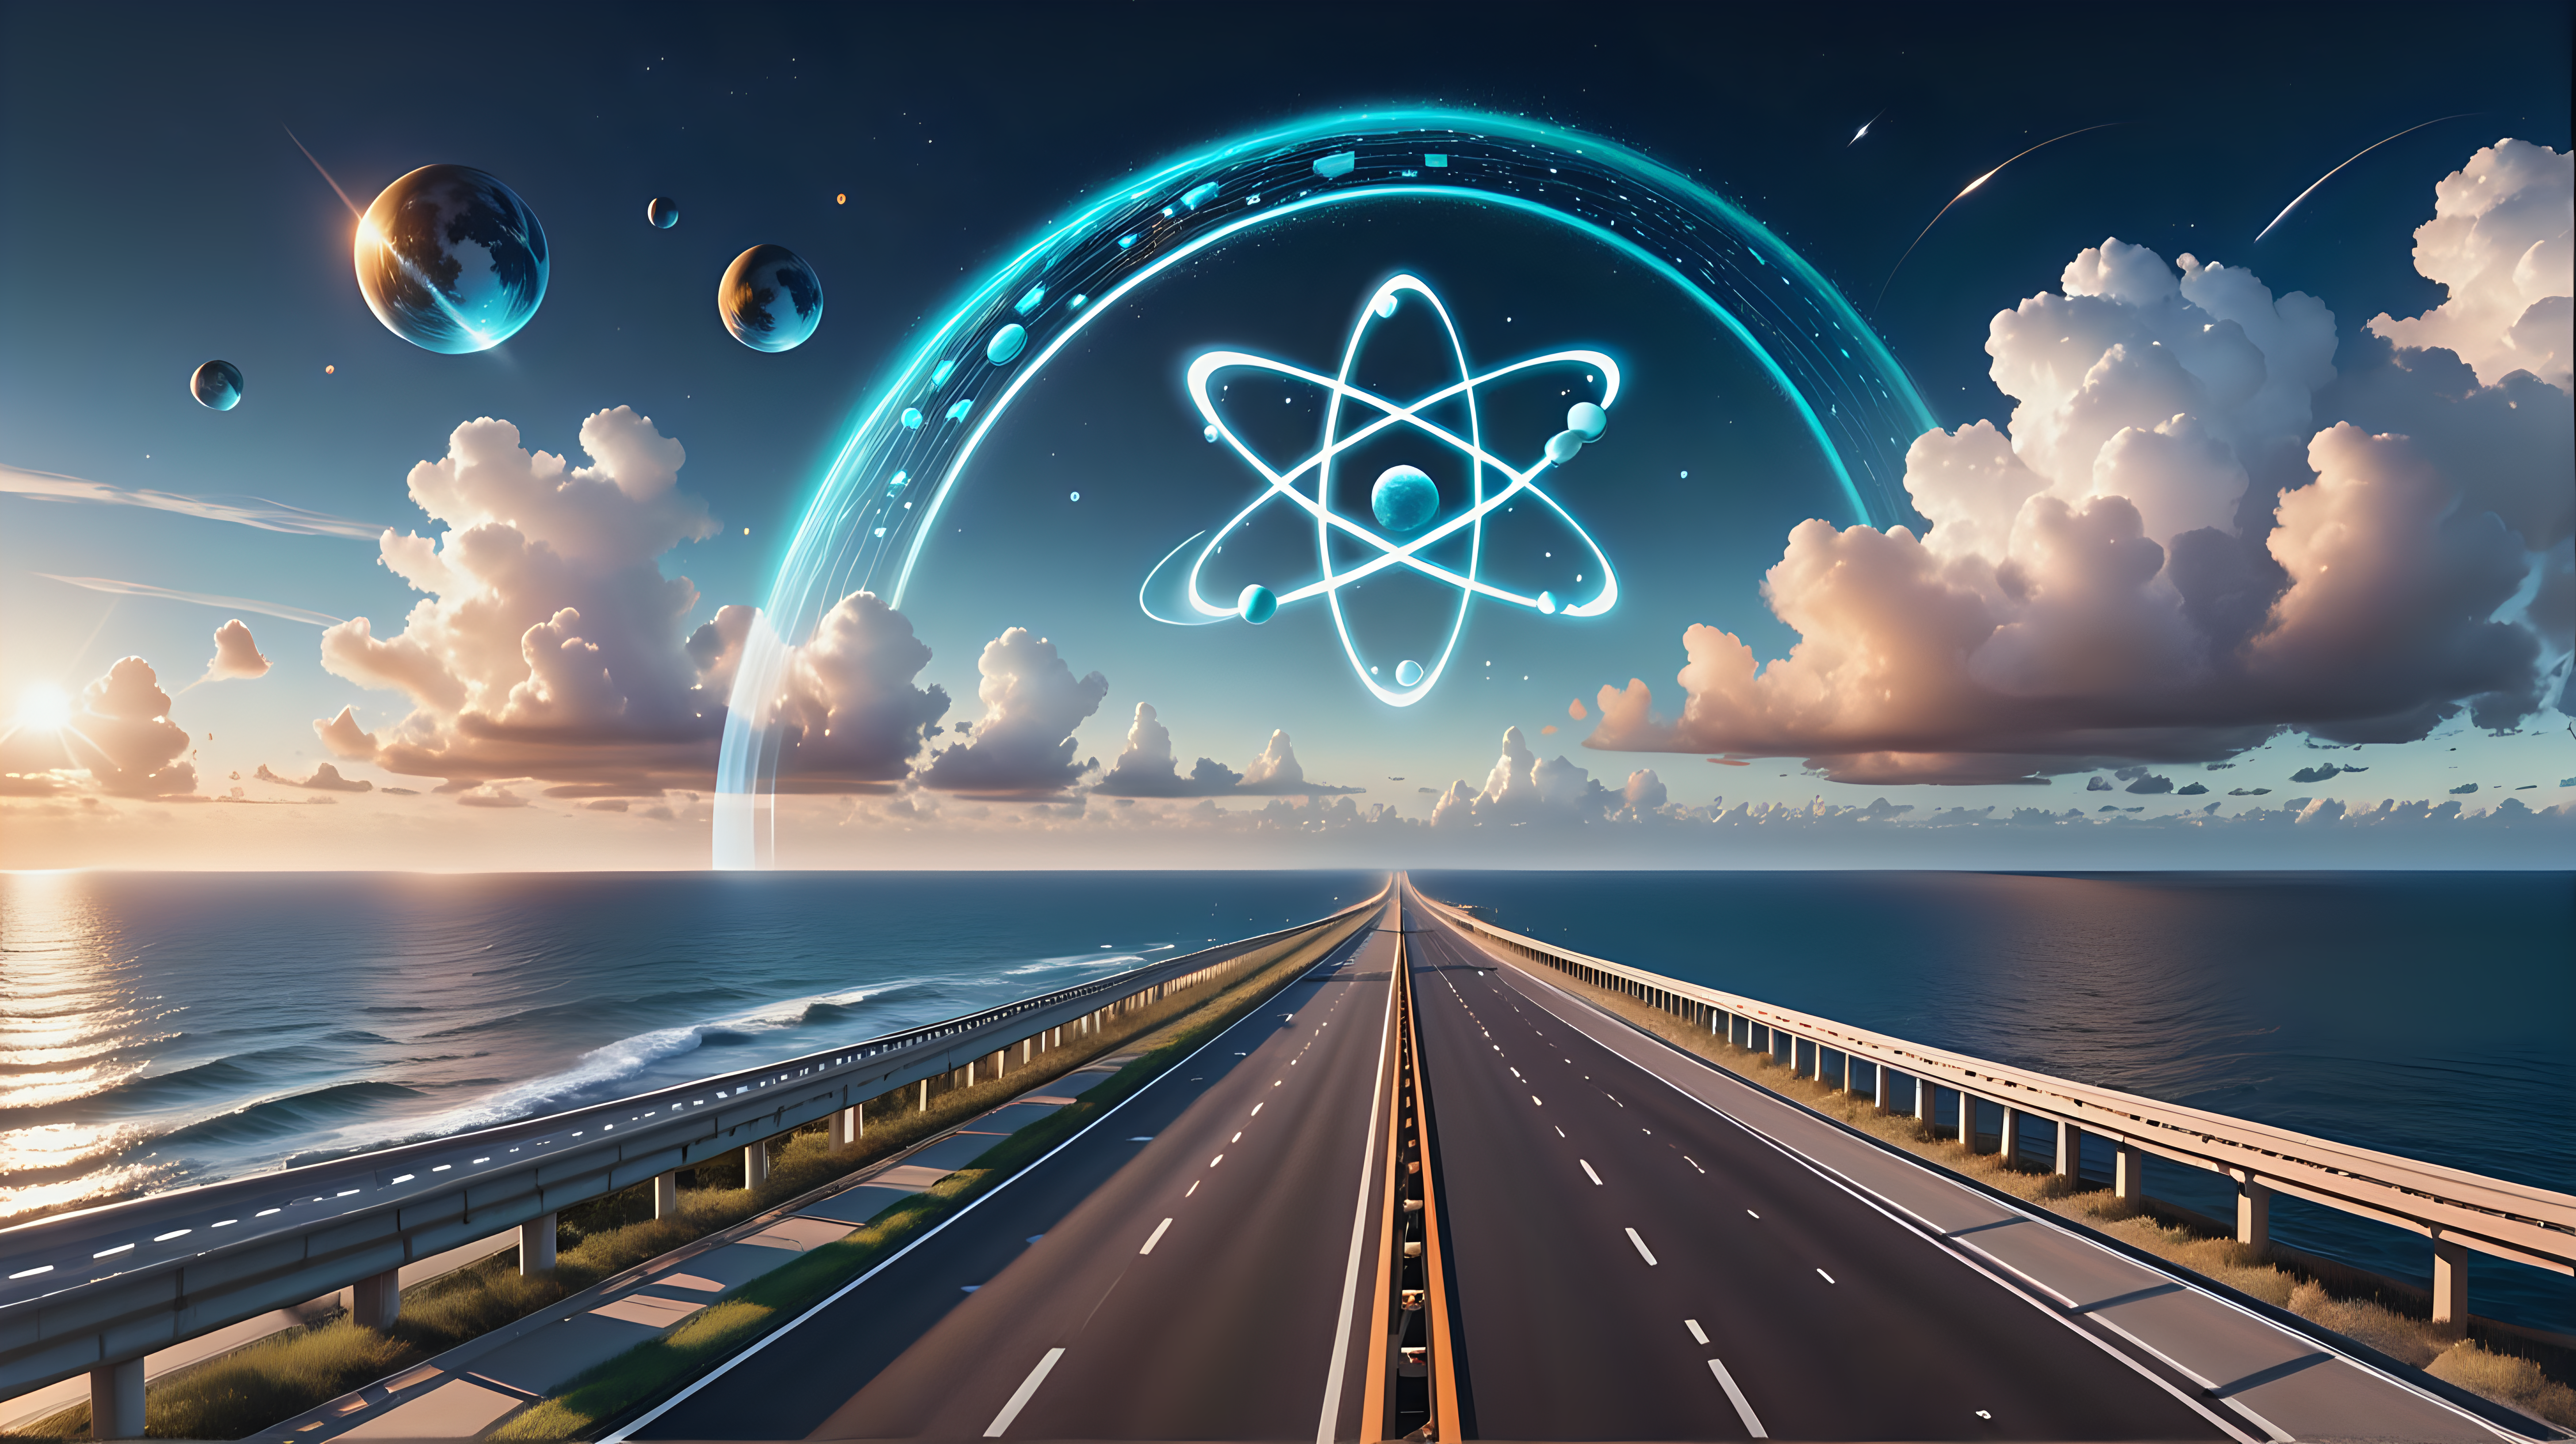 Scientific Symbols Hovering Over Ocean Highway